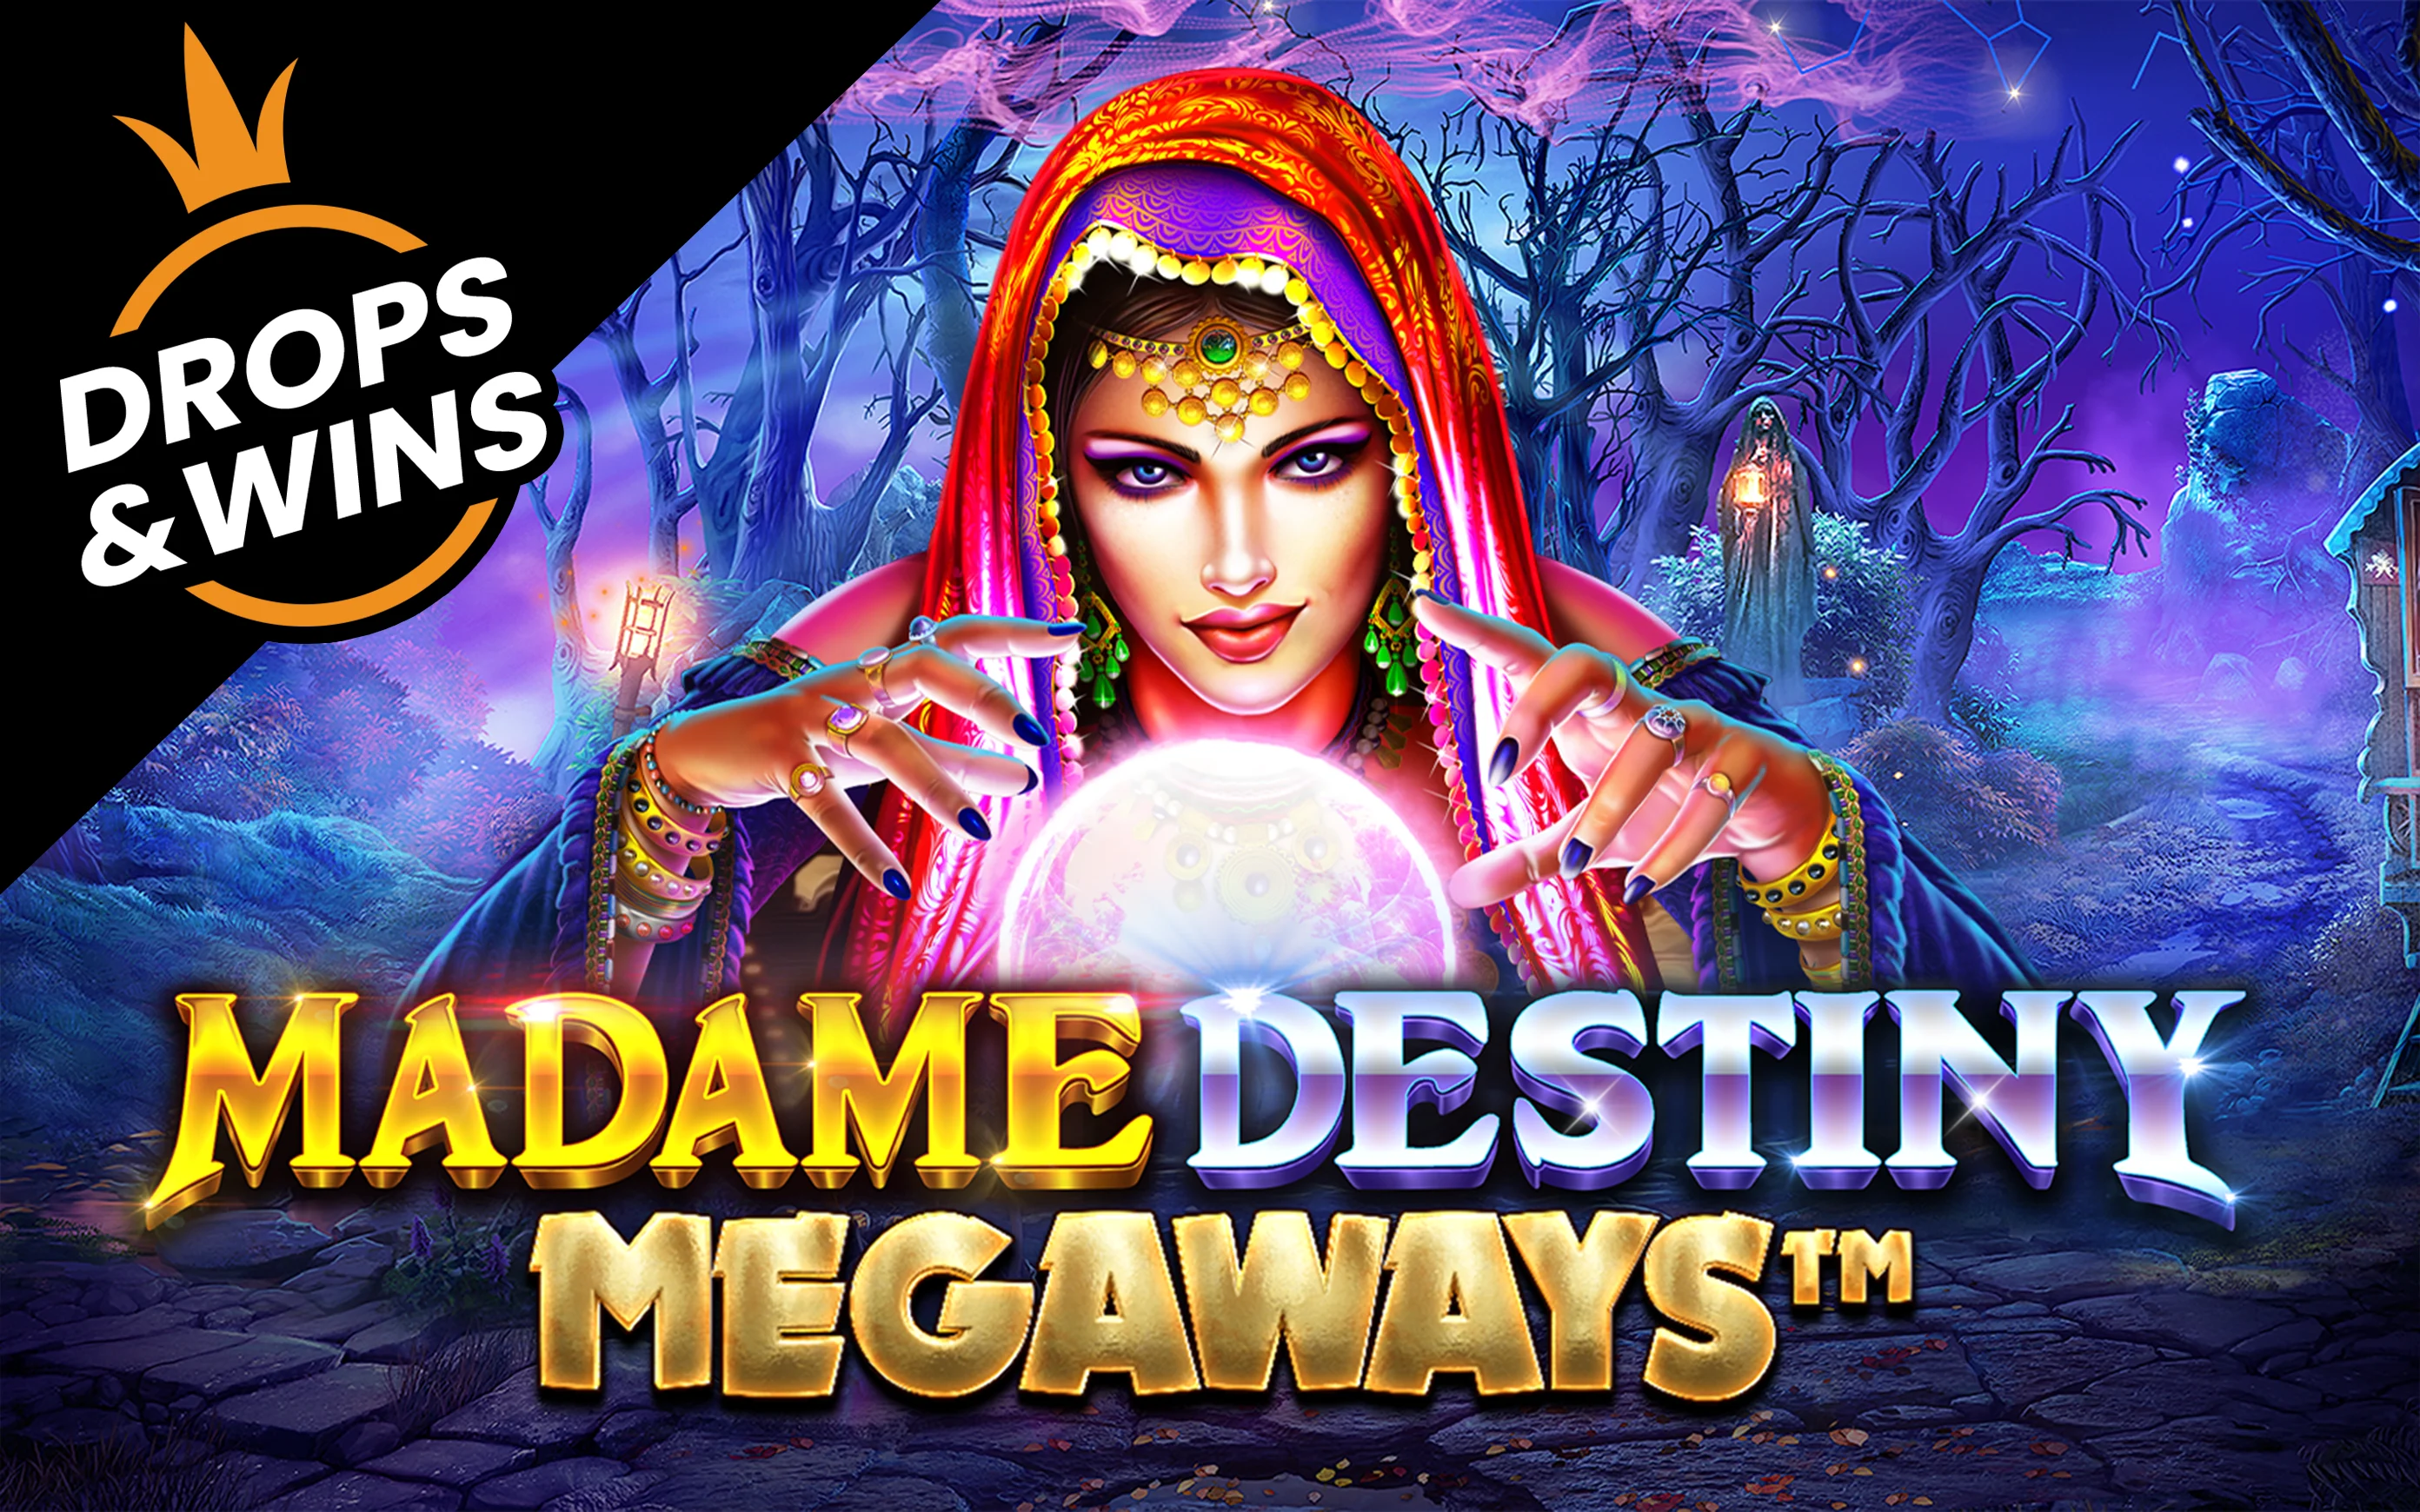 Joacă Madame Destiny Megaways™ în cazinoul online Starcasino.be